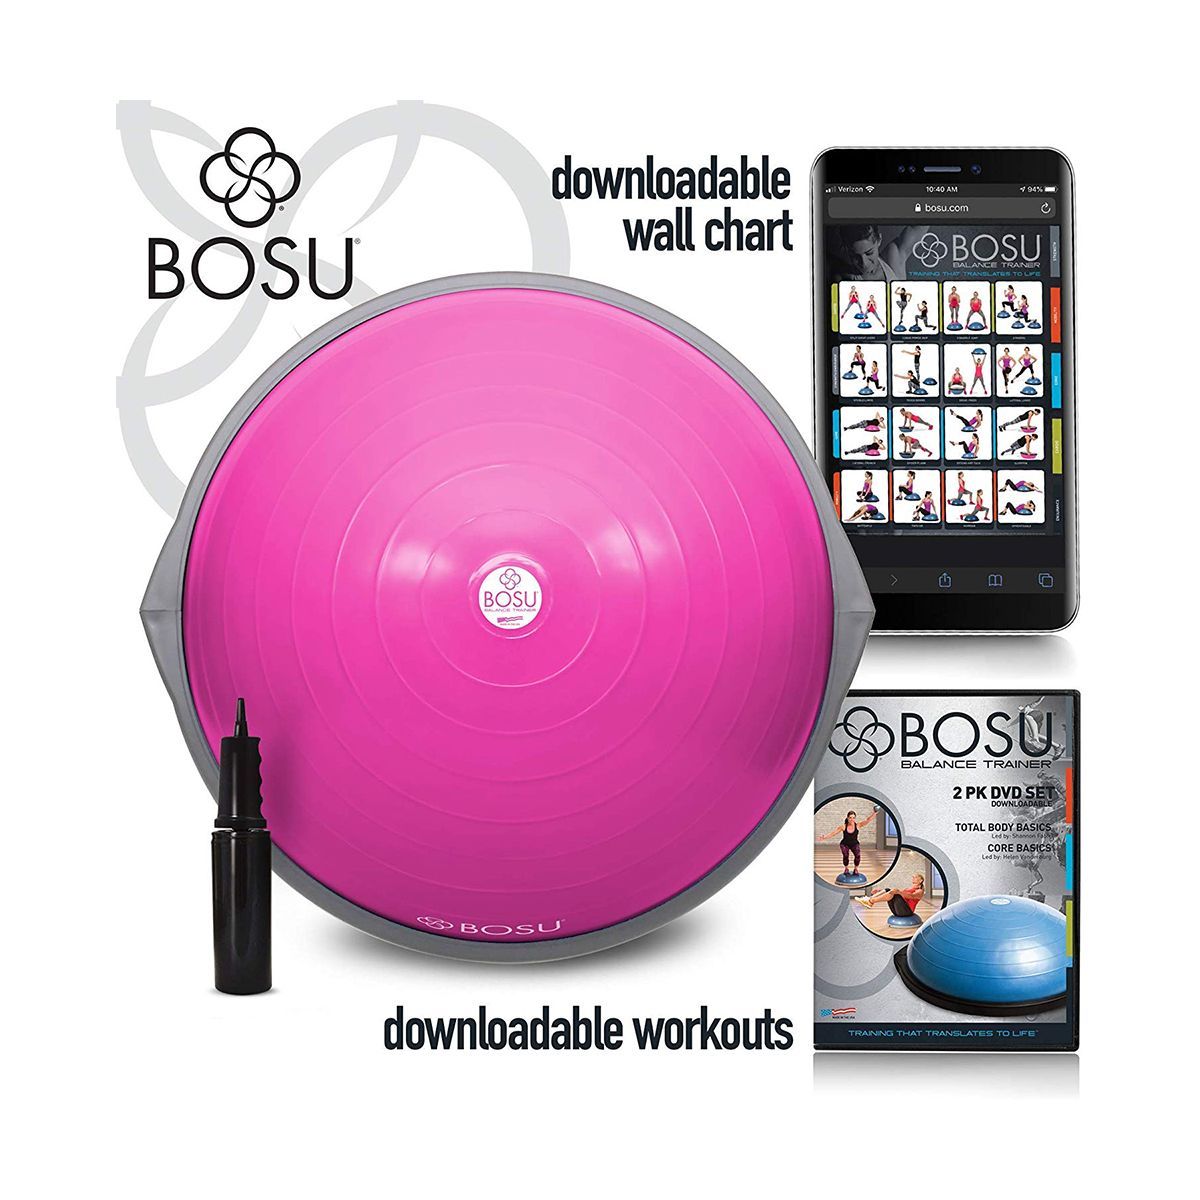 Bosu 72-10850 Home Gym Equipment The Original Balance Trainer 65 cm Diameter, Pink and Gray | Target